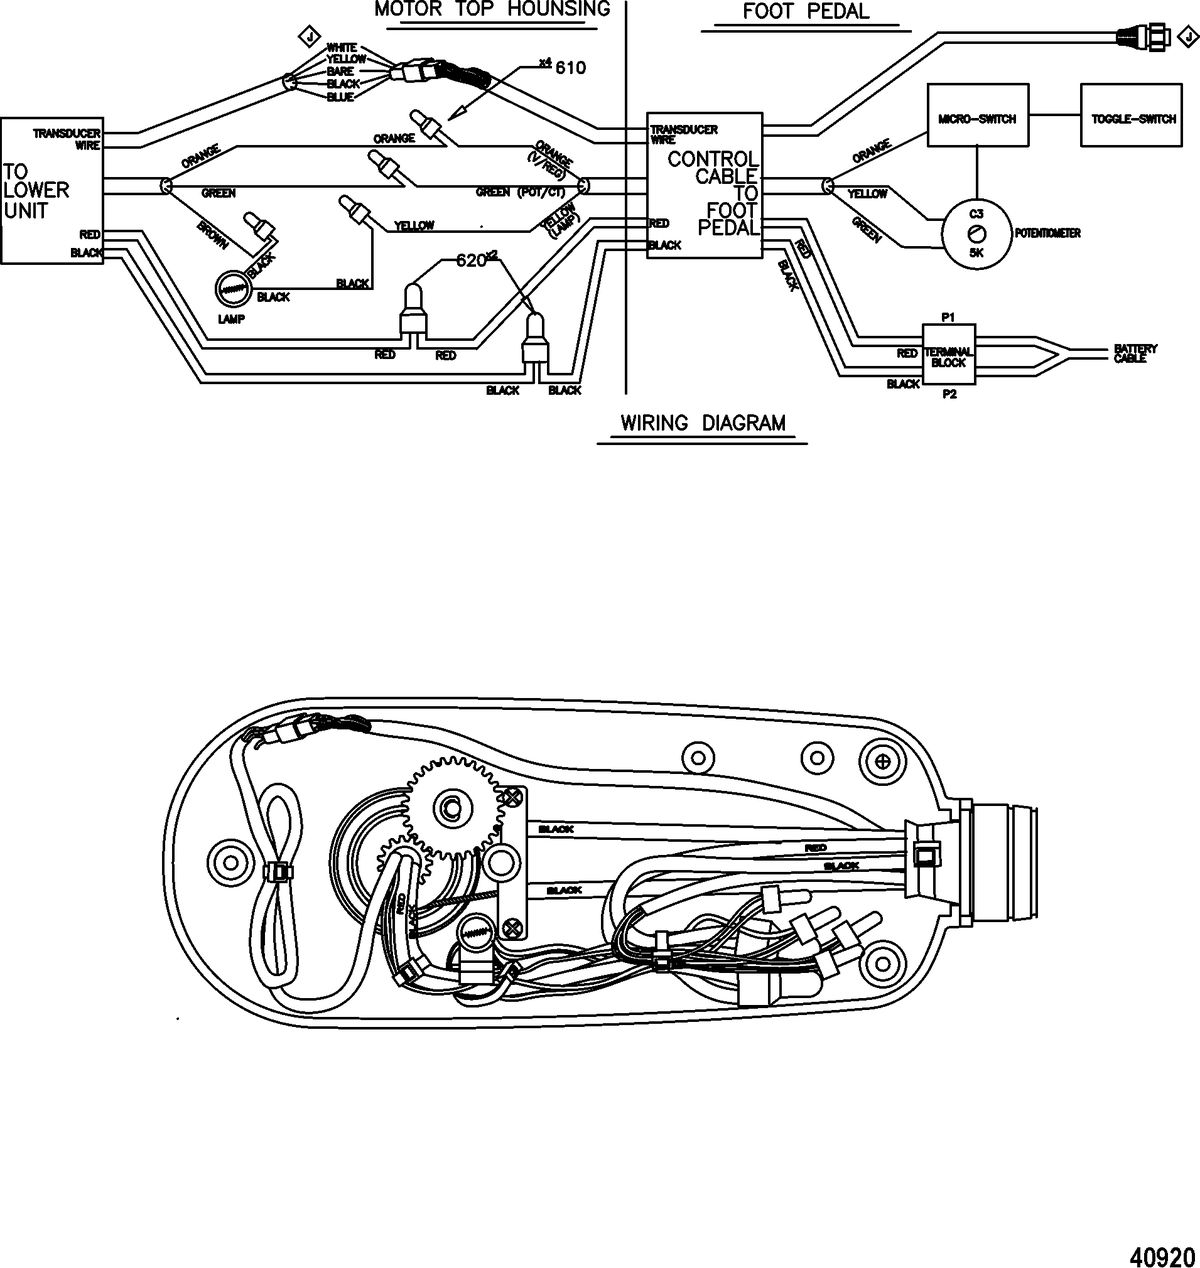 TROLLING MOTOR MOTORGUIDE TOUR LOWRANCE DIGITAL SERIES Wire Diagram(TR109LFBD) (36 Volt)